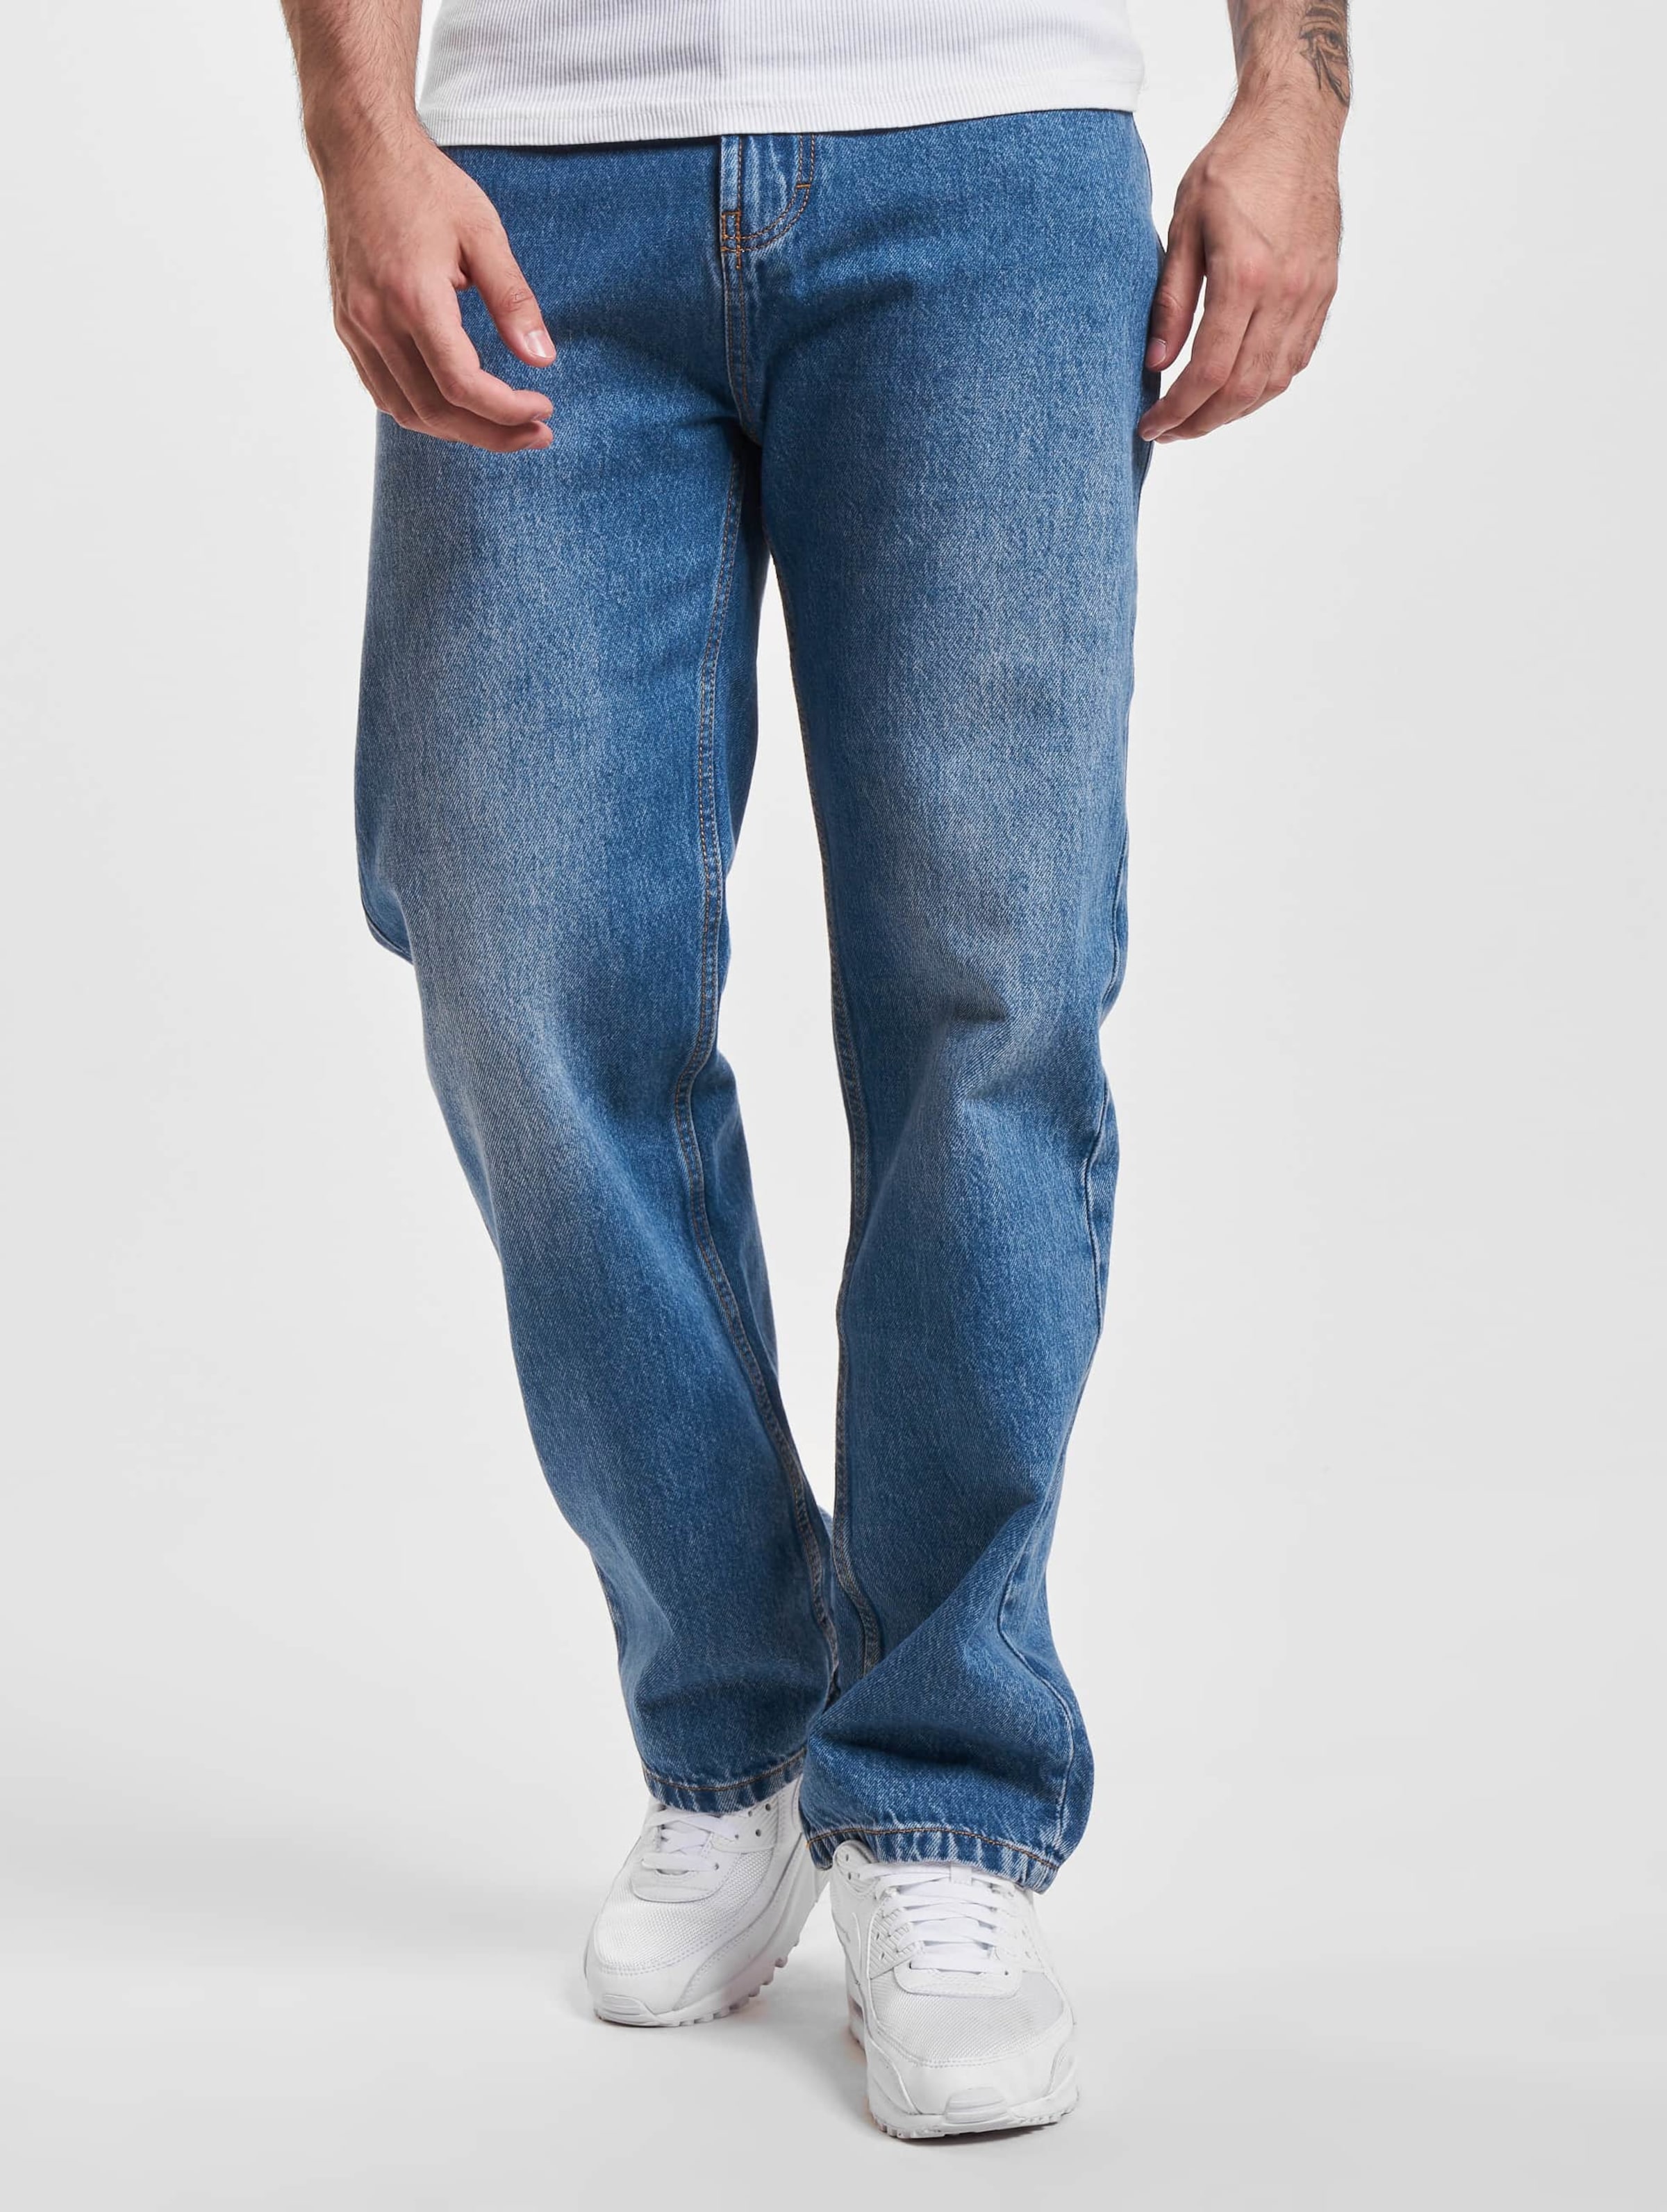 Denim Project Dpmr. Loose Straight Fit Jeans Mannen op kleur blauw, Maat 3630